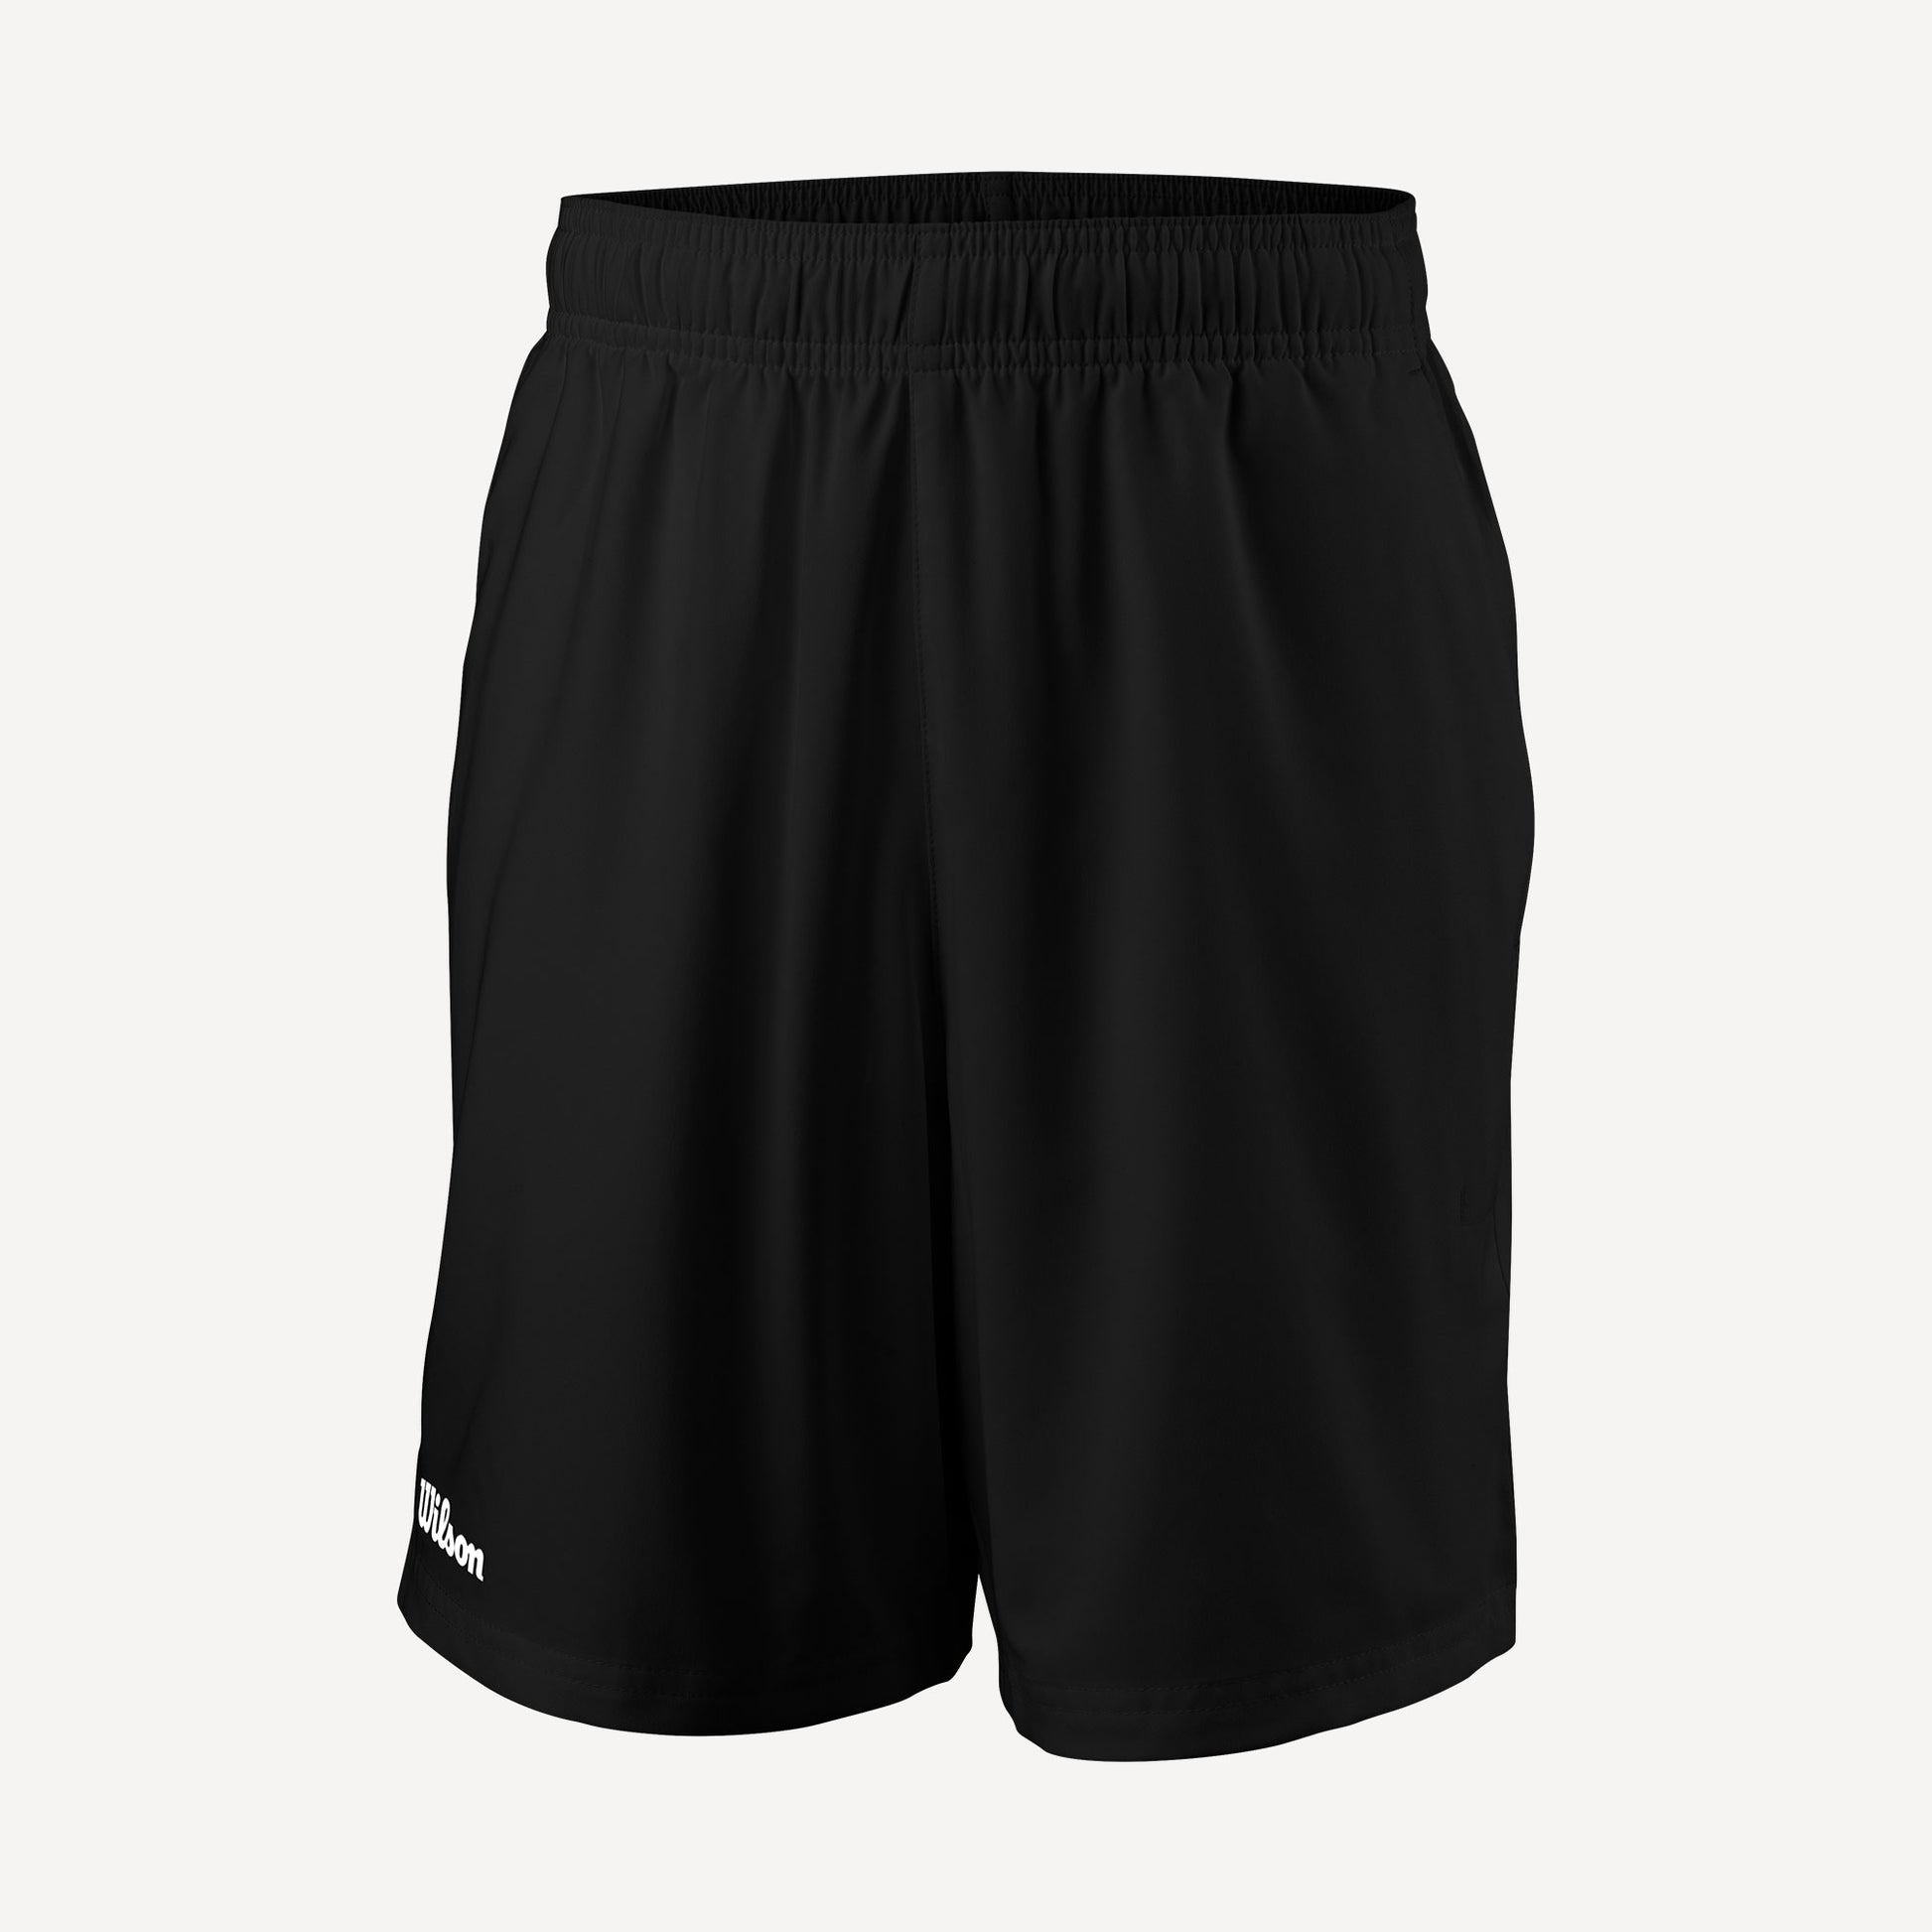 Wilson Team 2 Boys' 7-Inch Tennis Shorts Black (1)